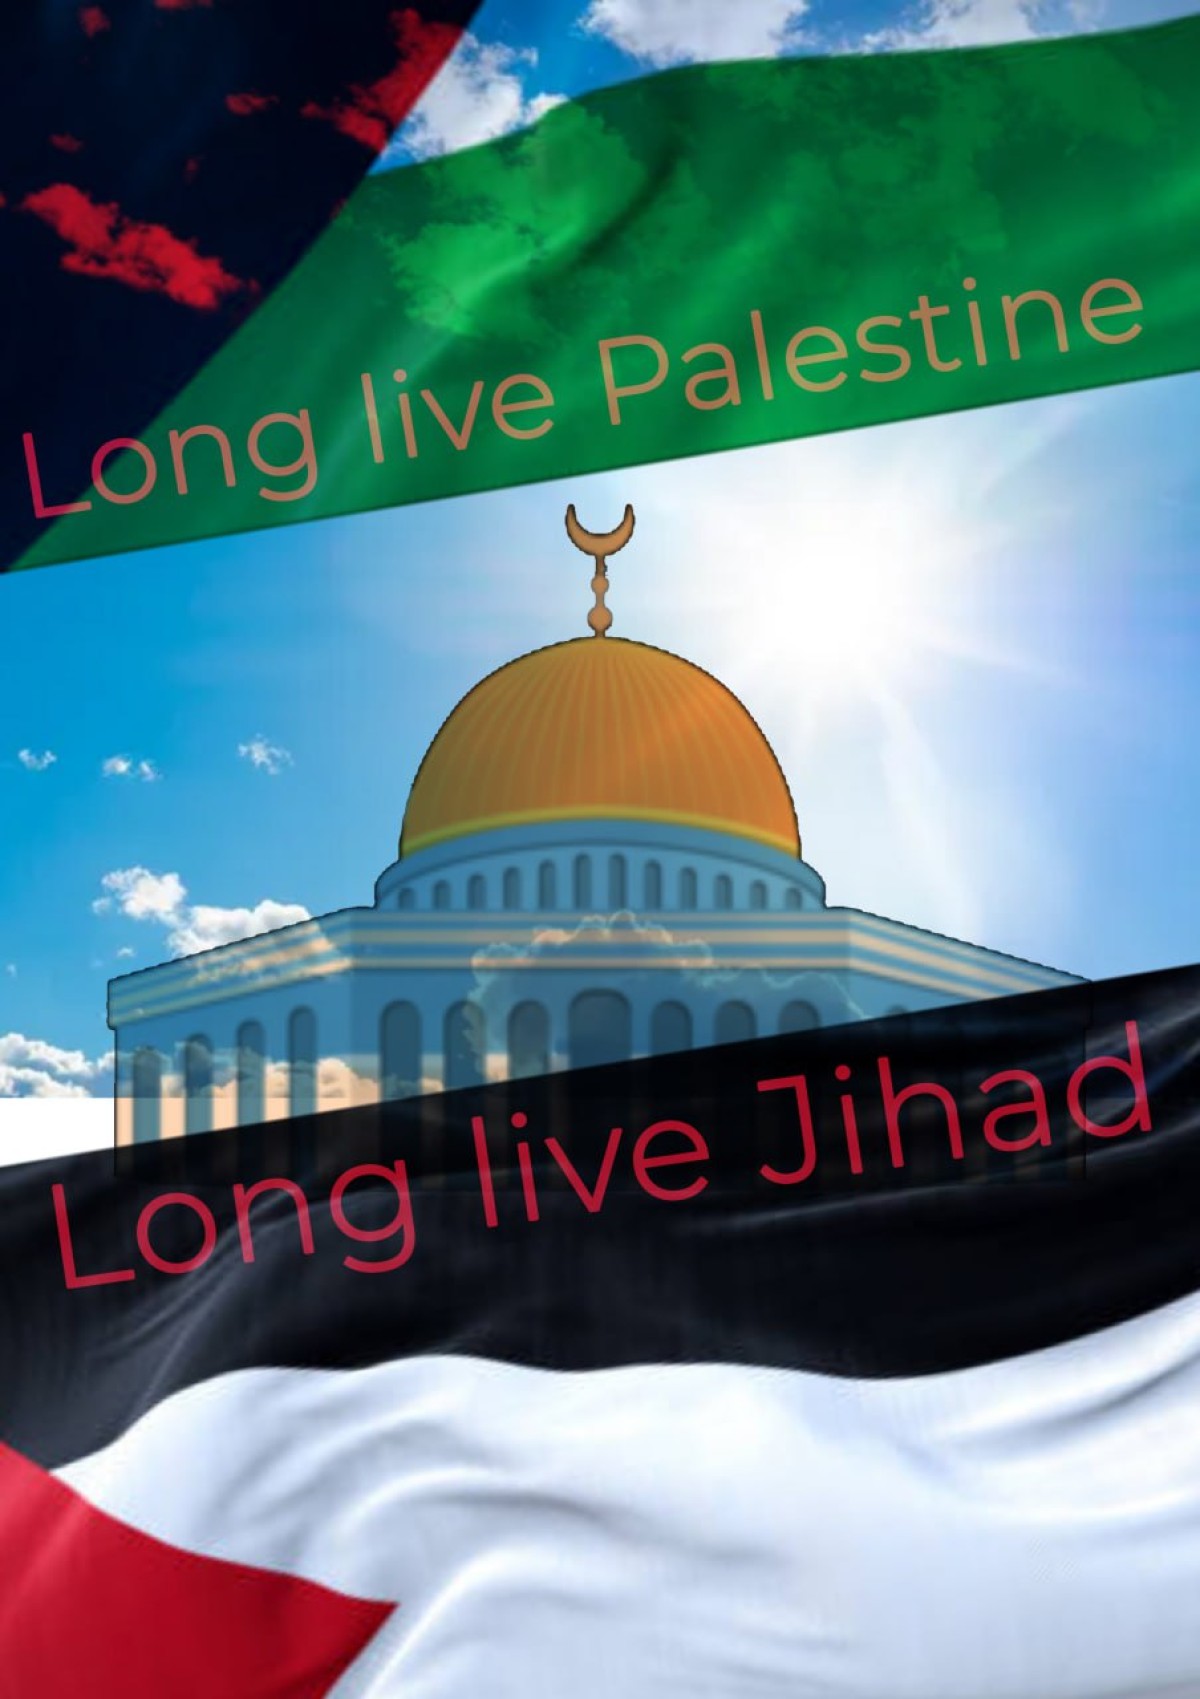 Long live Palestine Long live Jihad